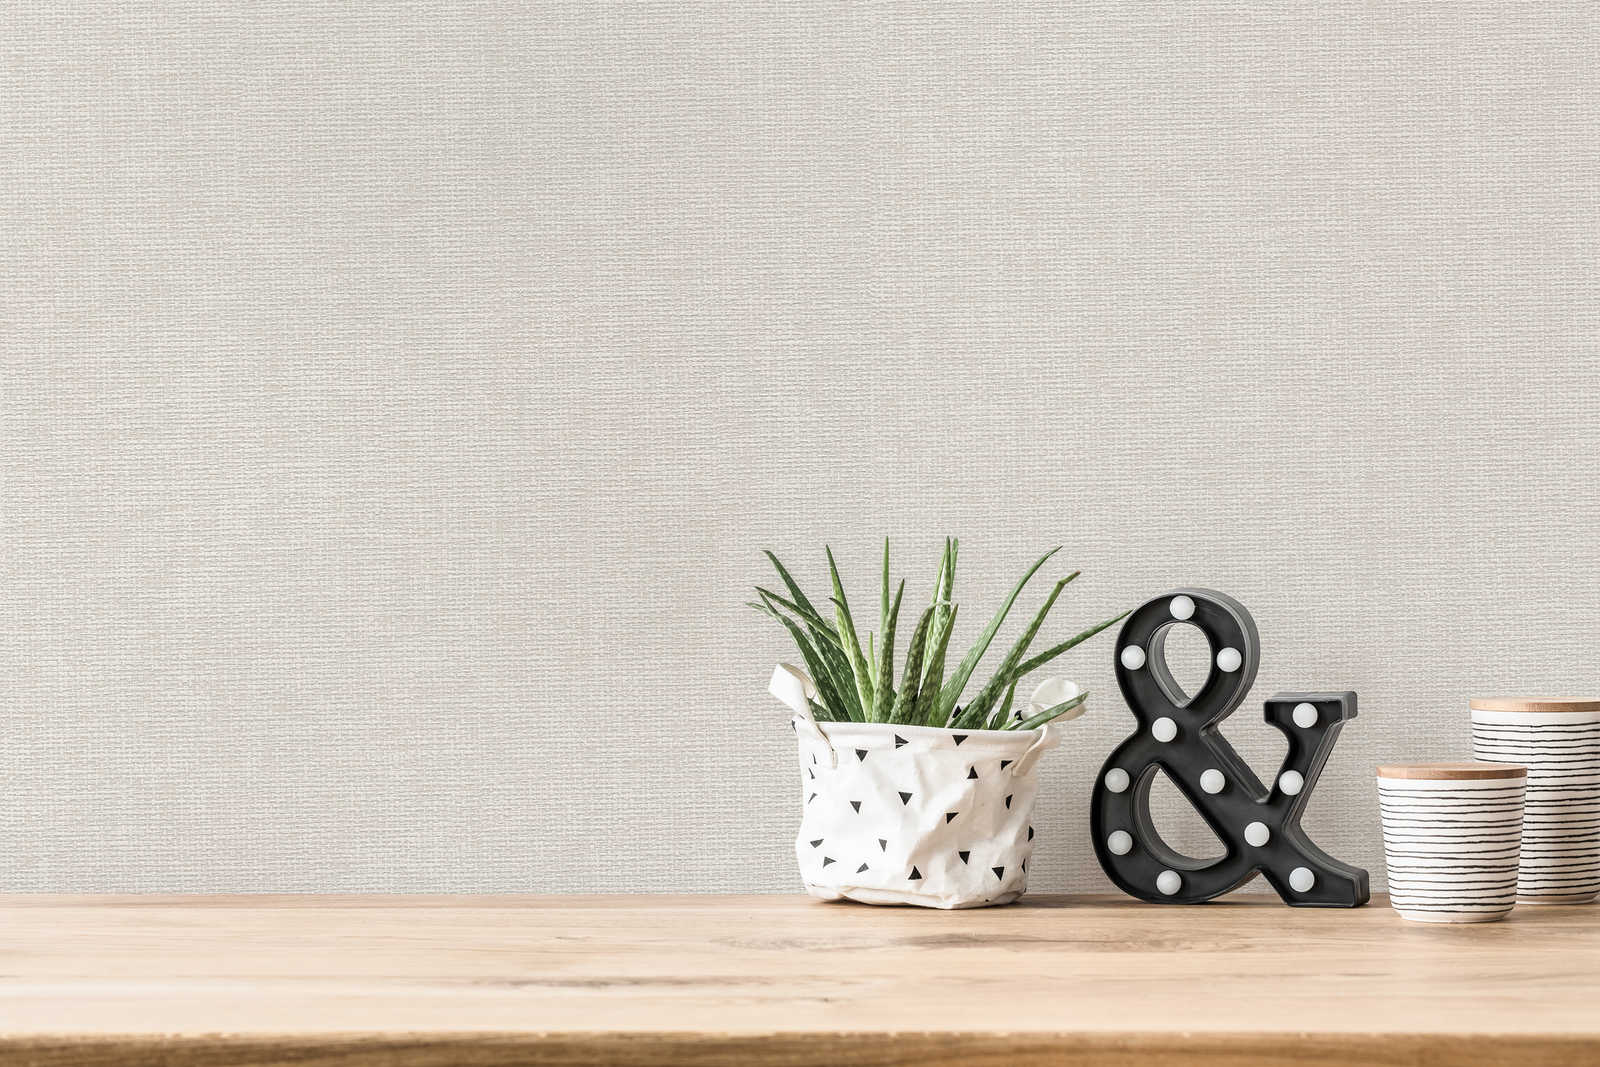             Leinenoptik Tapete im Scandinavian Design – Grau
        